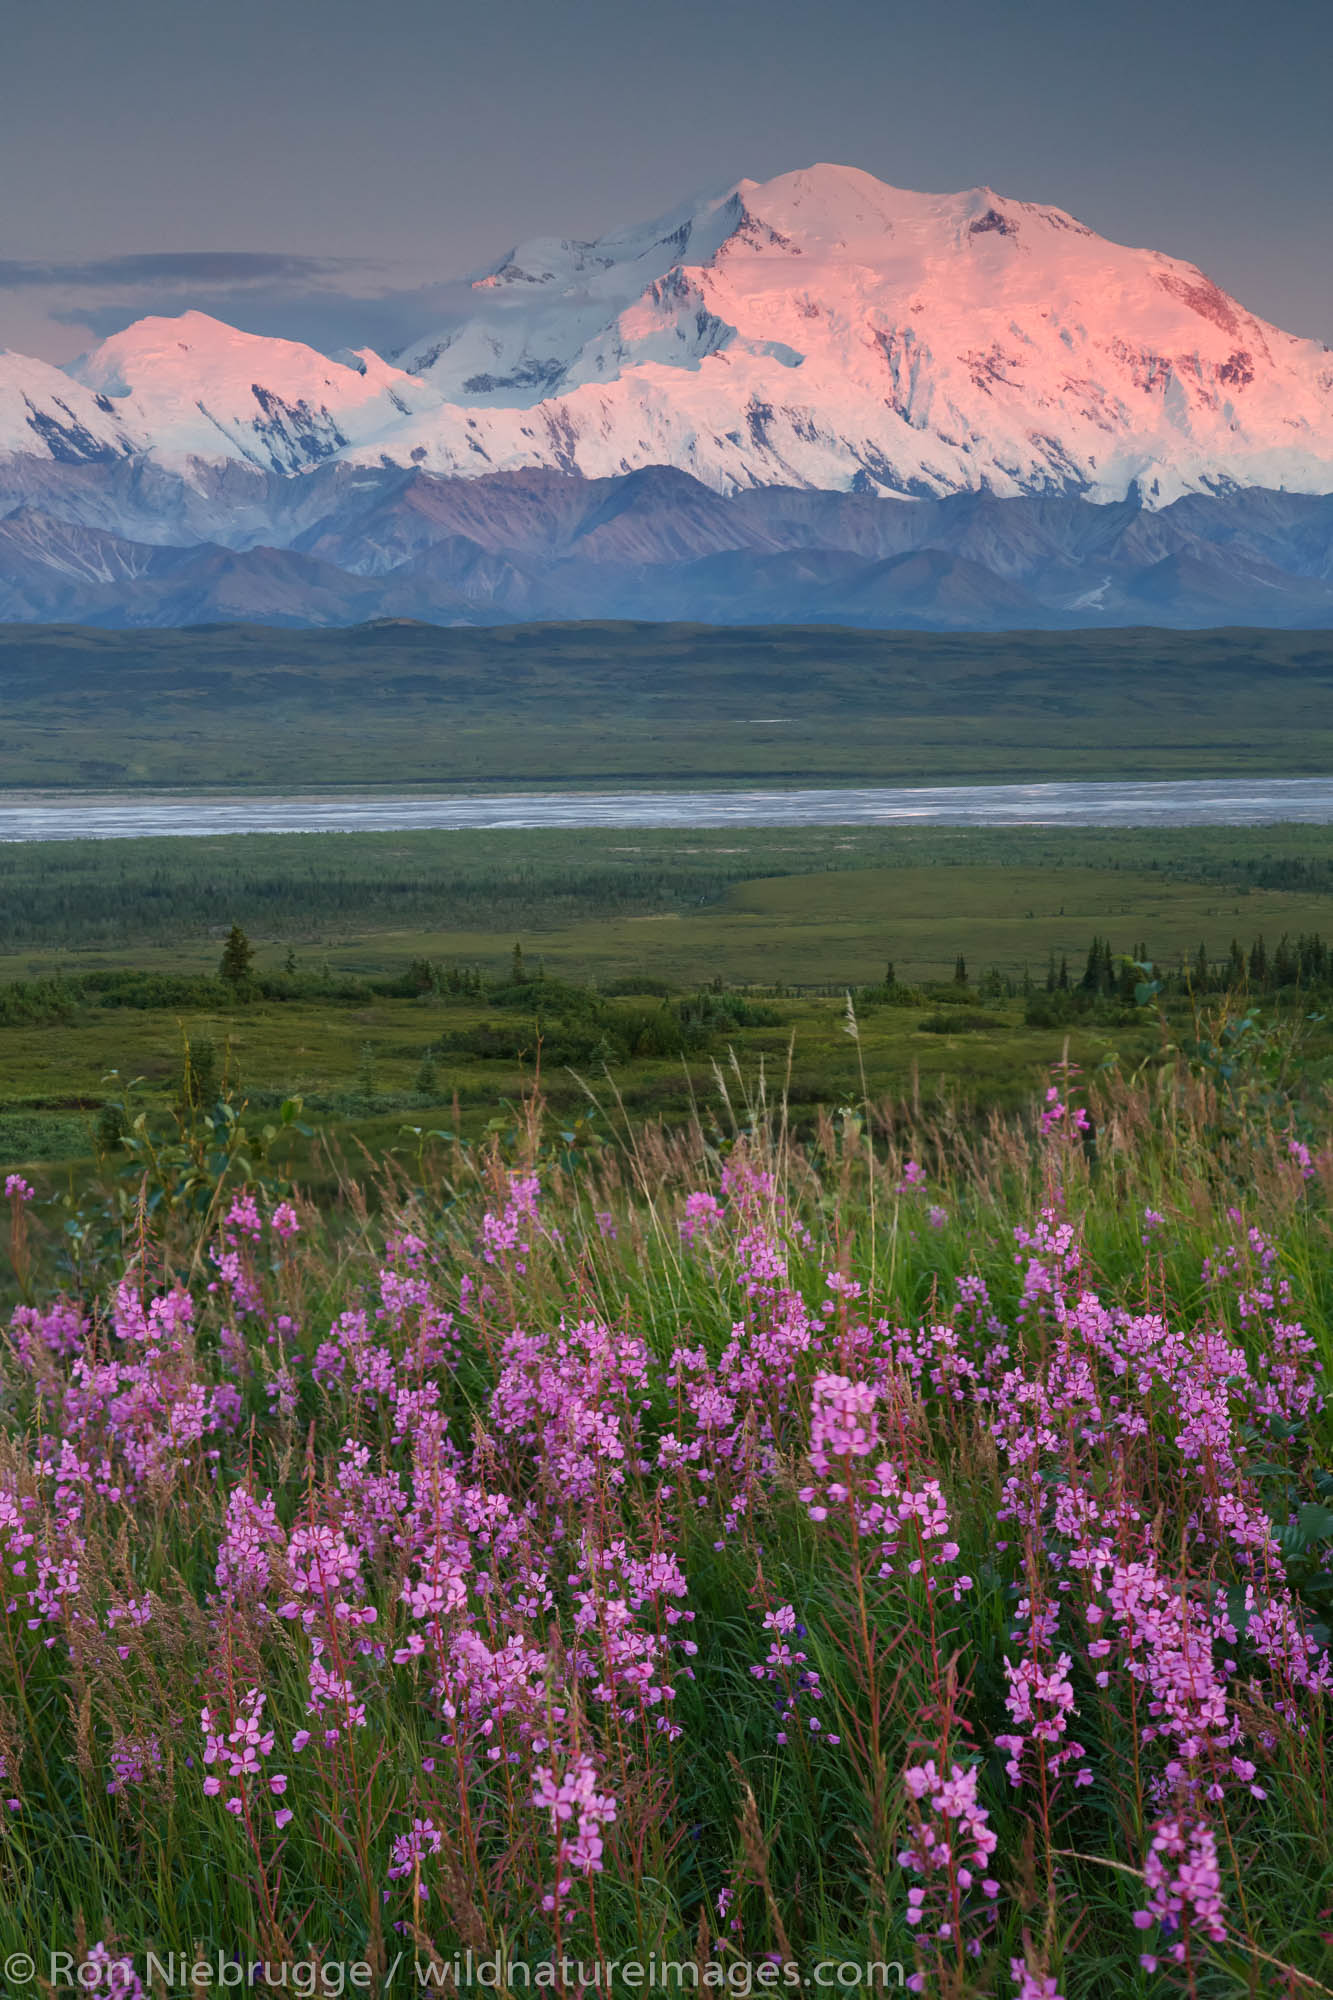 Mt McKinley also known as Denali, Denali National Park, Alaska.